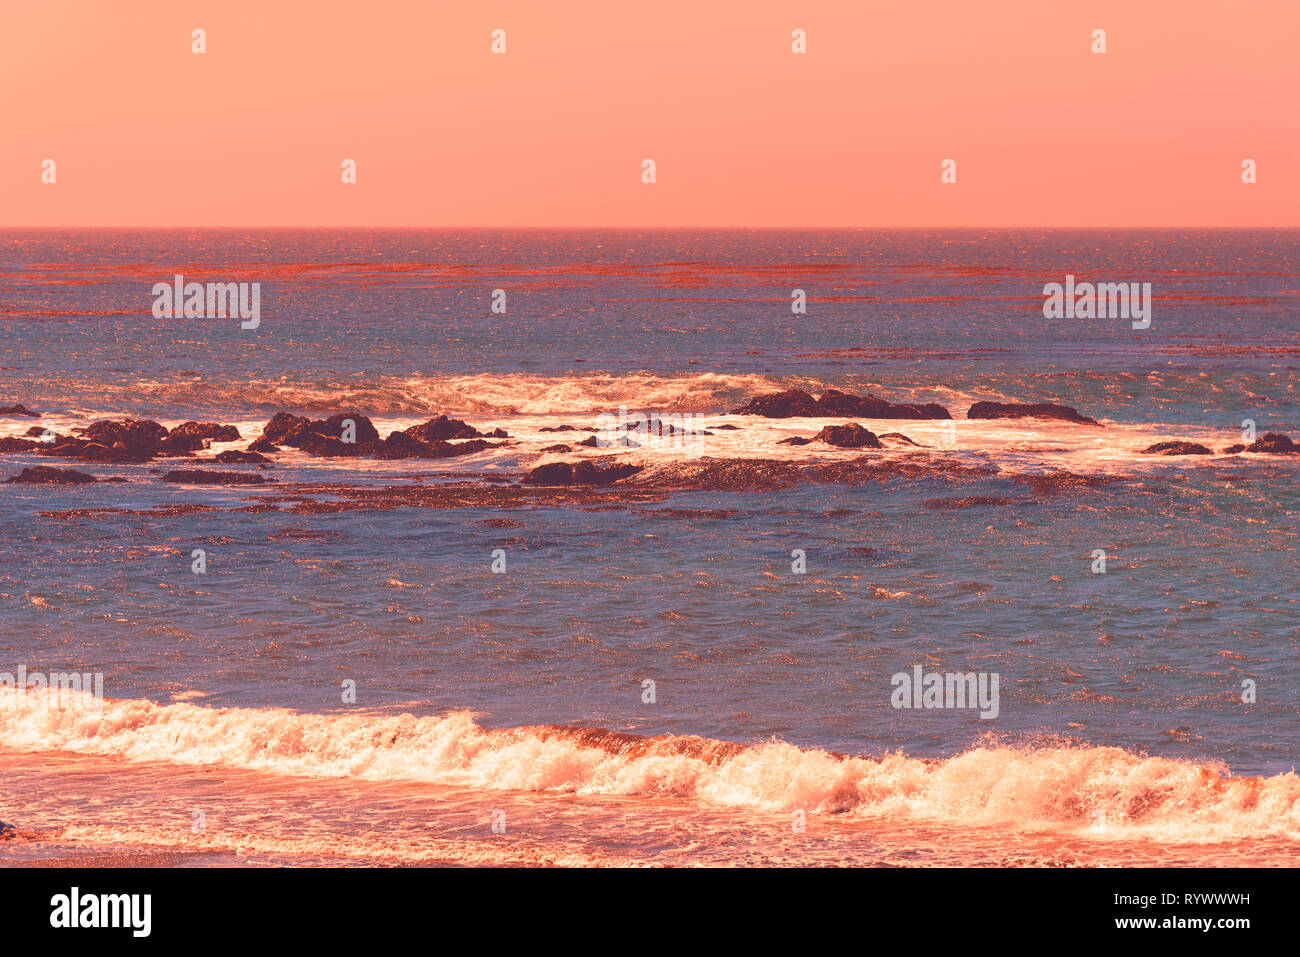 Blue ocean with waves breaking onto rocks, under pastel orange and pink skies. Stock Photo